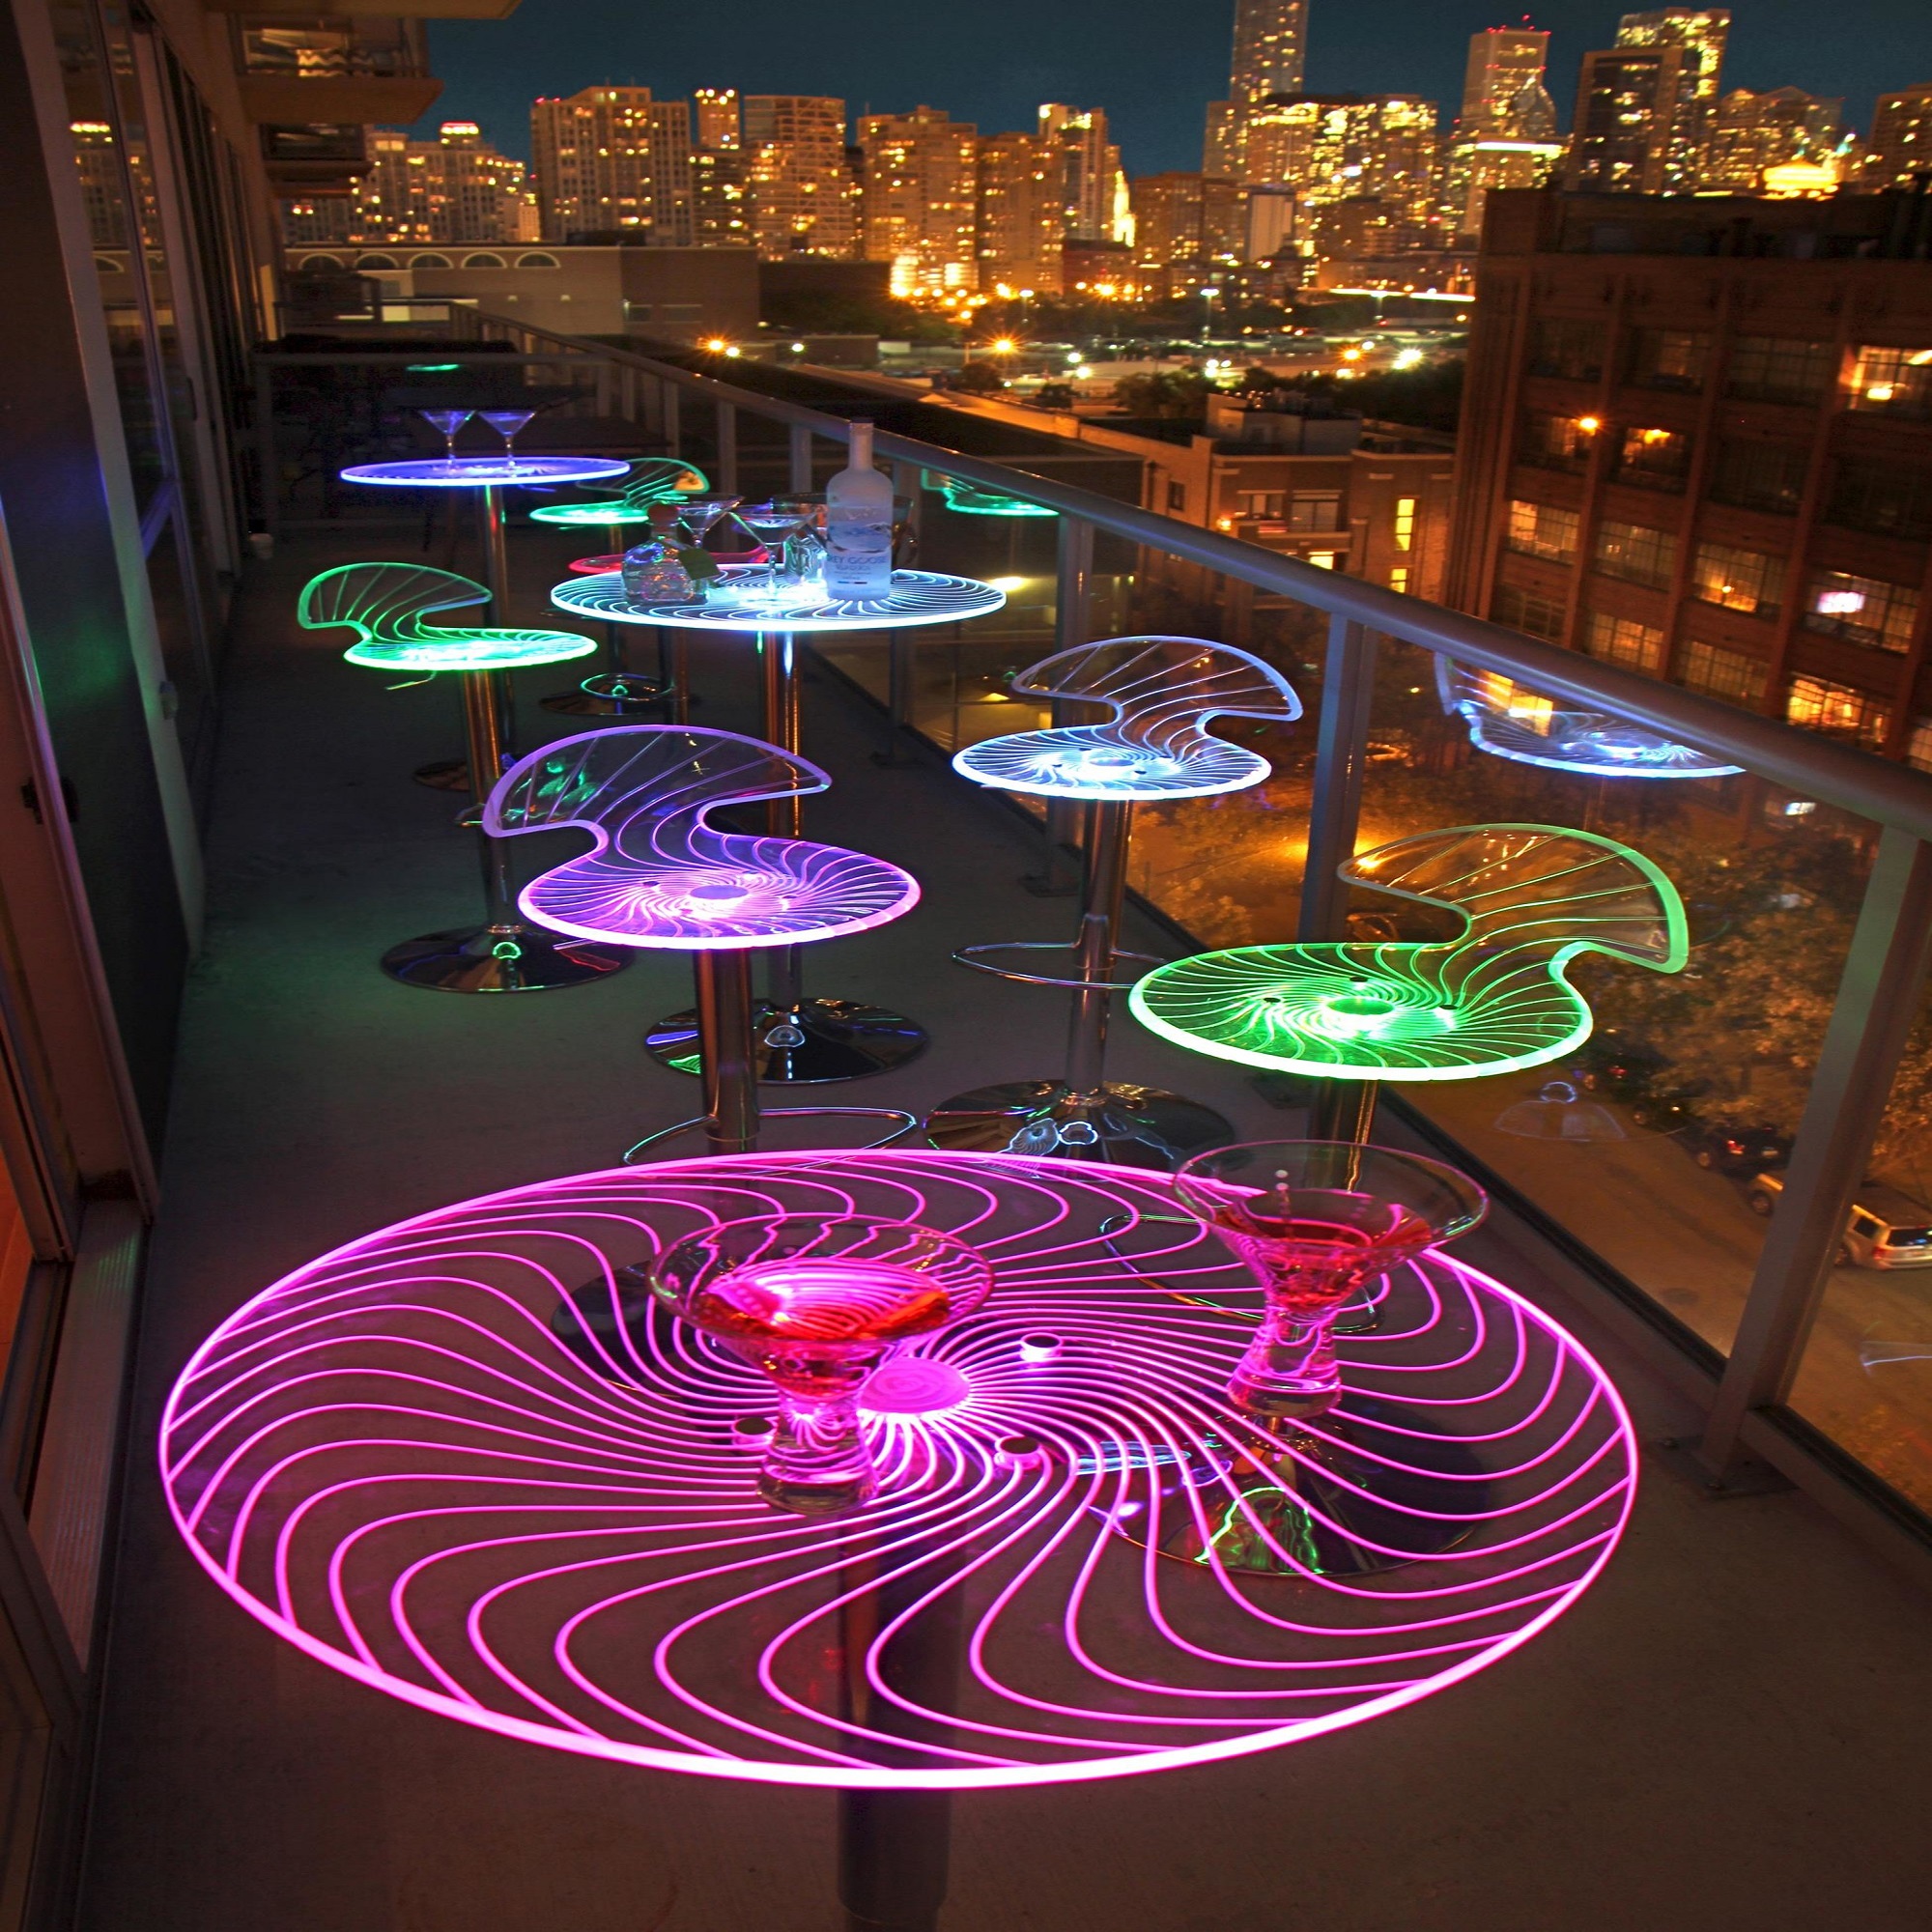 Contemporary Home Living 41” Multicolored Round Spyra Contemporary Light Up Adjustable Bar Table